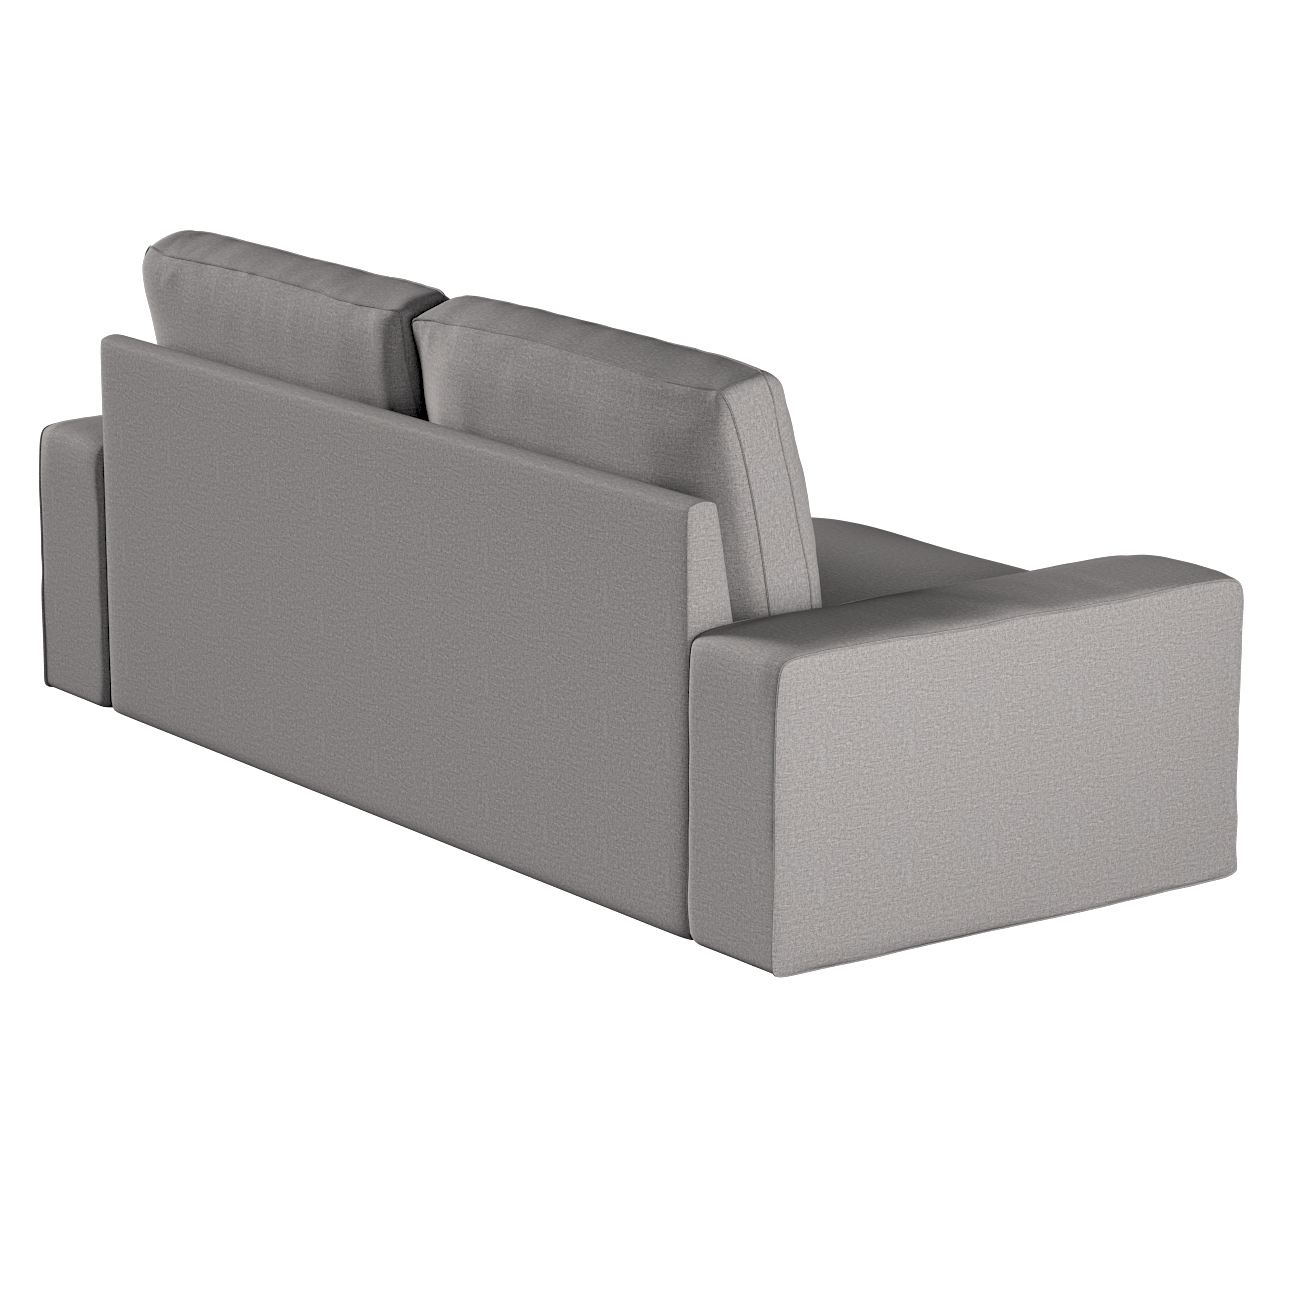 Bezug für Kivik 3-Sitzer Sofa, grau, Bezug für Sofa Kivik 3-Sitzer, Edinbur günstig online kaufen